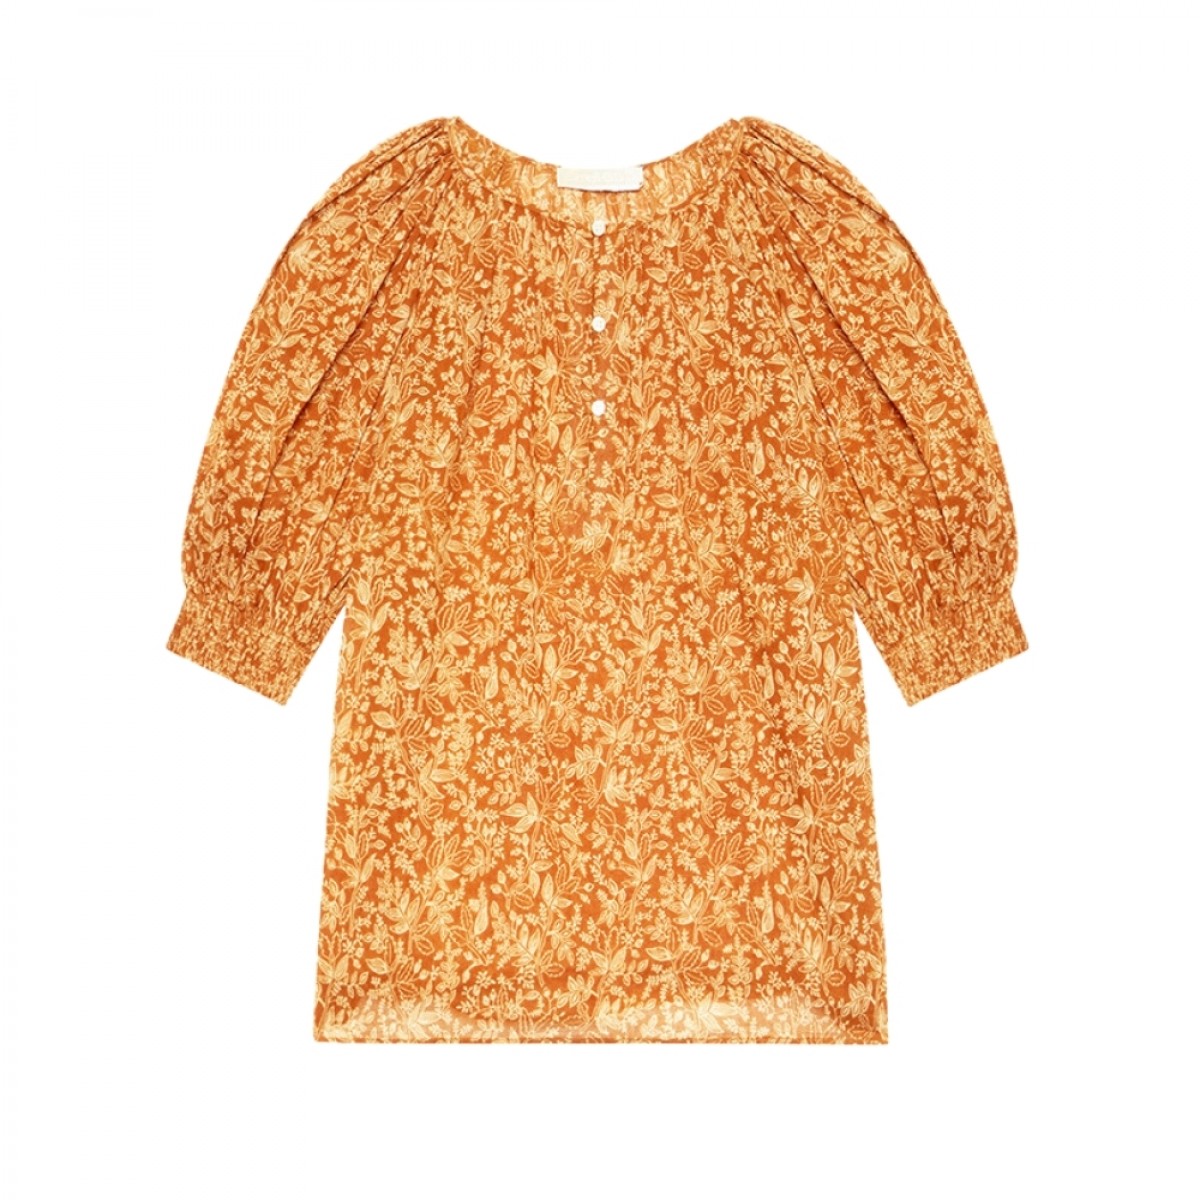 seban blouse - cinnamon - front